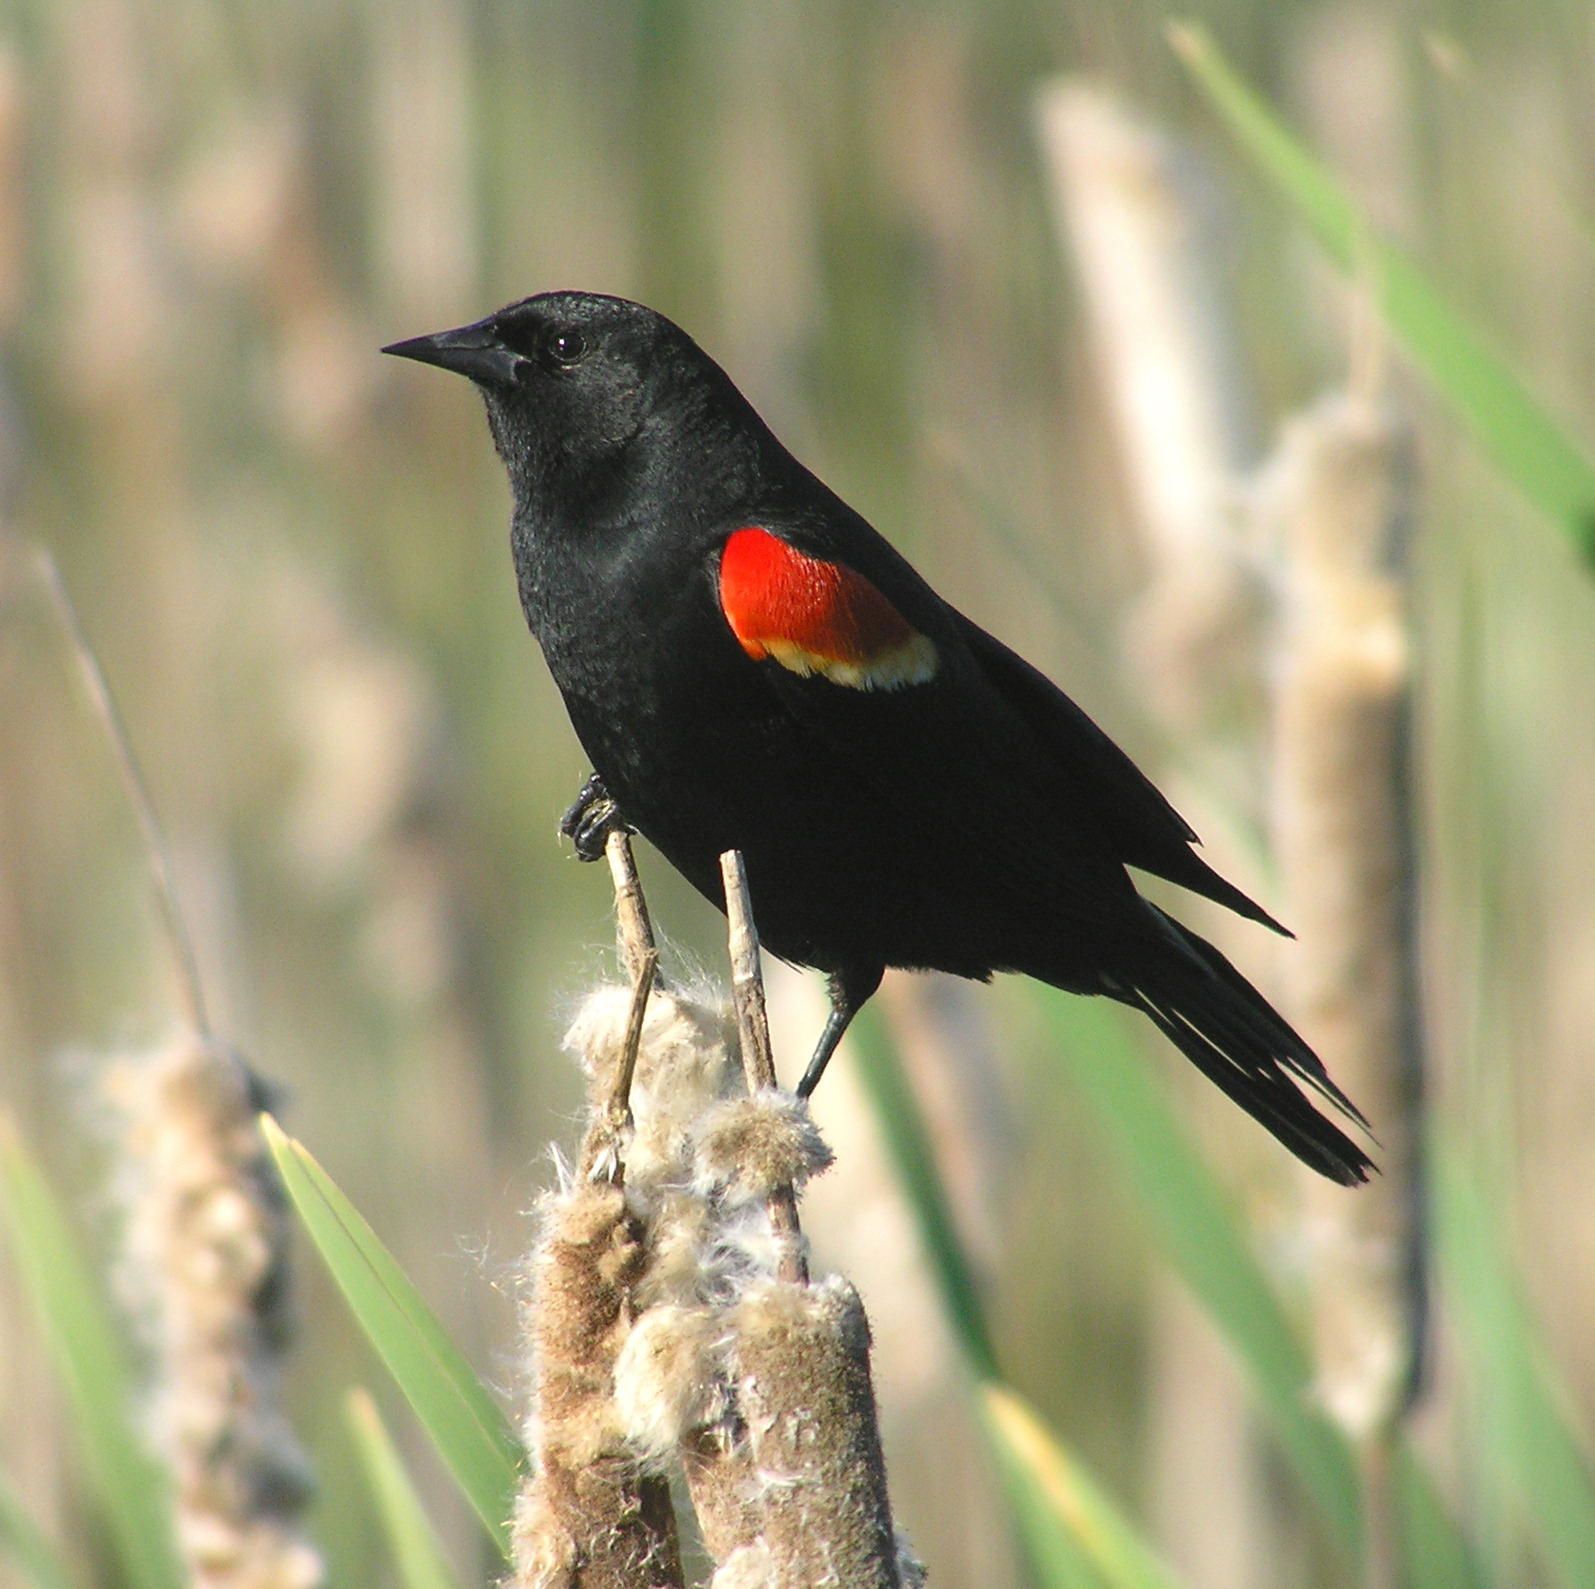 Red-Shouldered Blackbird | The Birds of Cuba